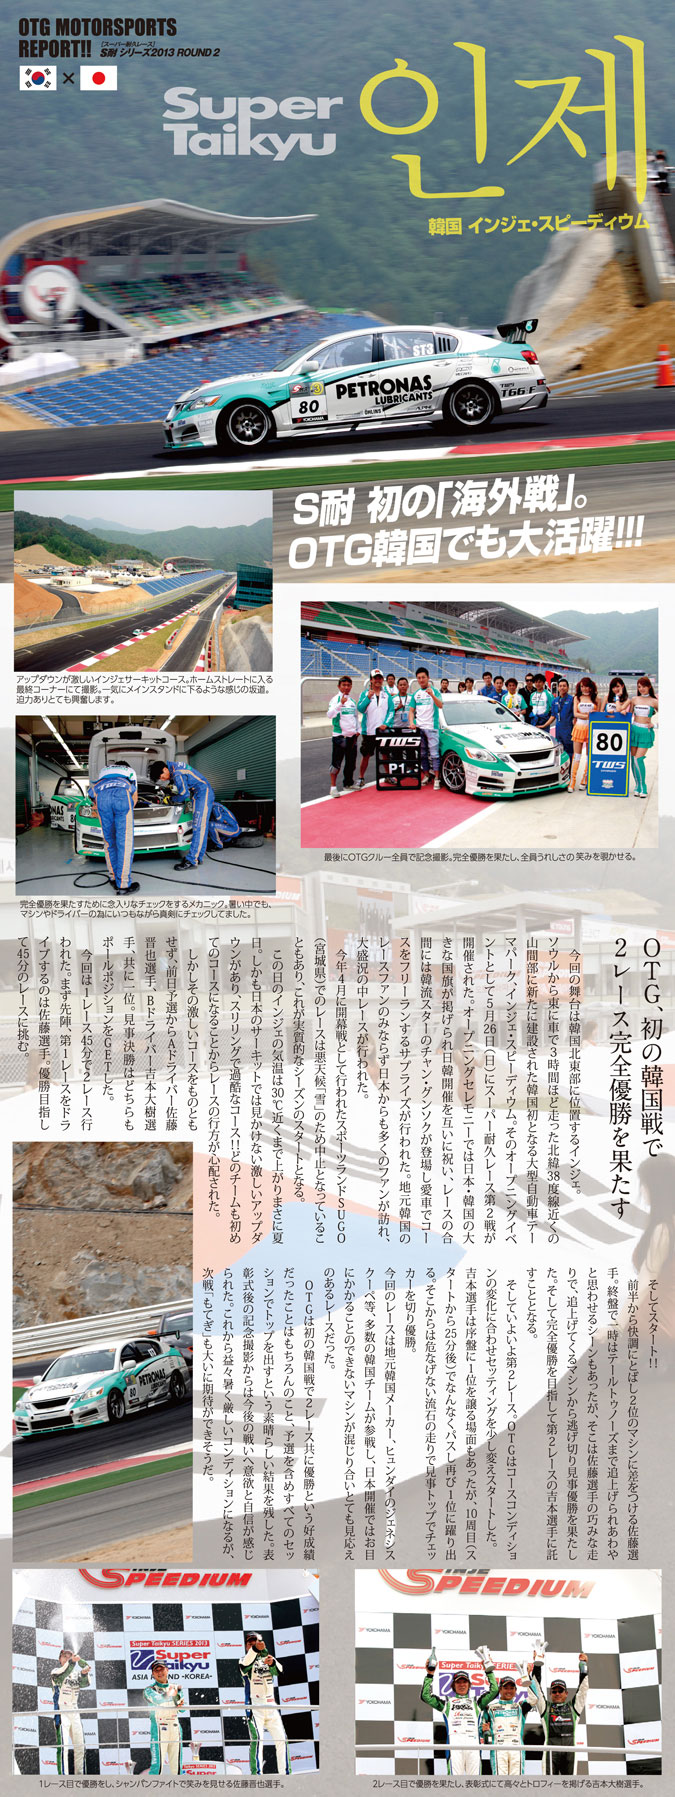 motor-sports-report1307.jpg